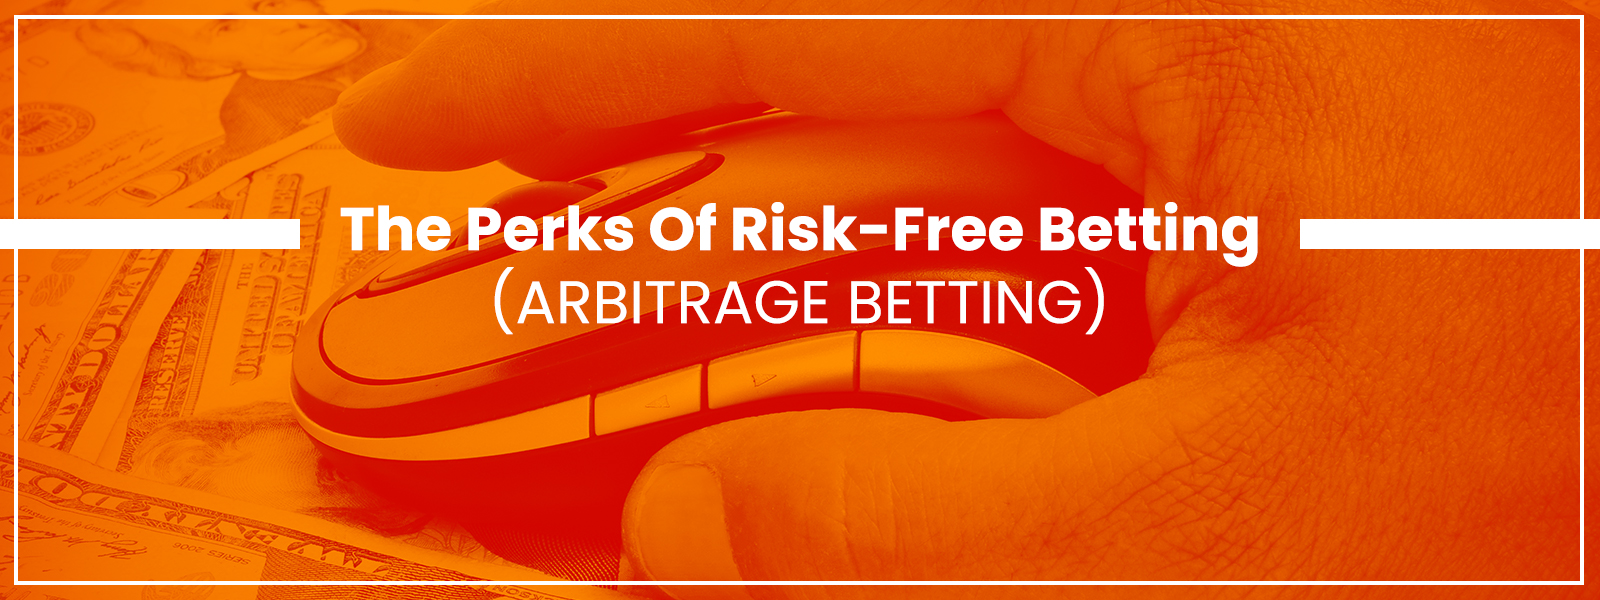 Arbitrage Betting - Risk-Free Betting